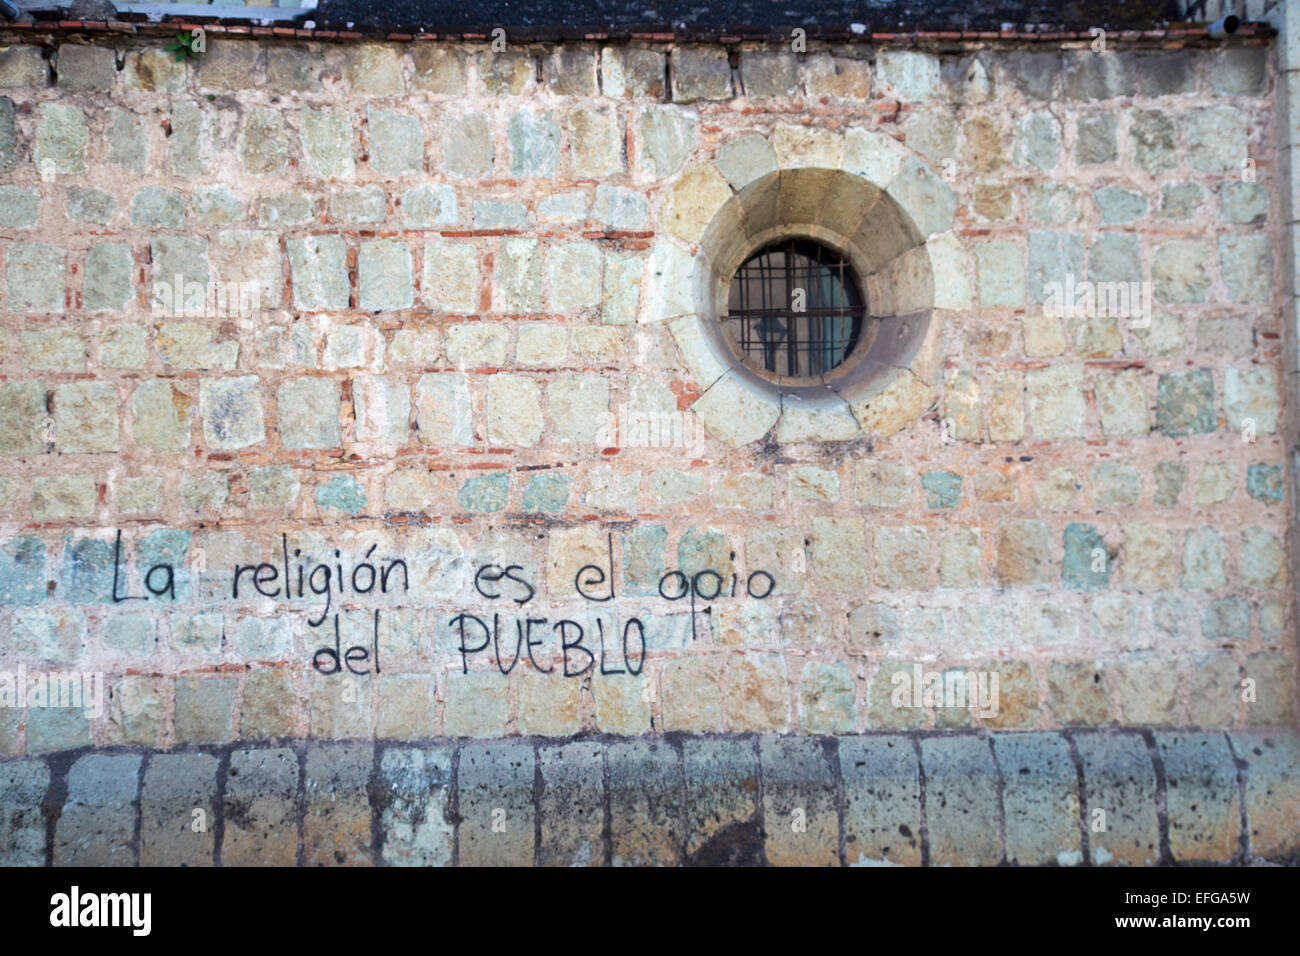 Oaxaca, Mexiko - Graffiti an der Wand der Kirche von San Felipe Neri Zitate Karl Marx: "Religion ist das Opium des Volkes." Stockfoto